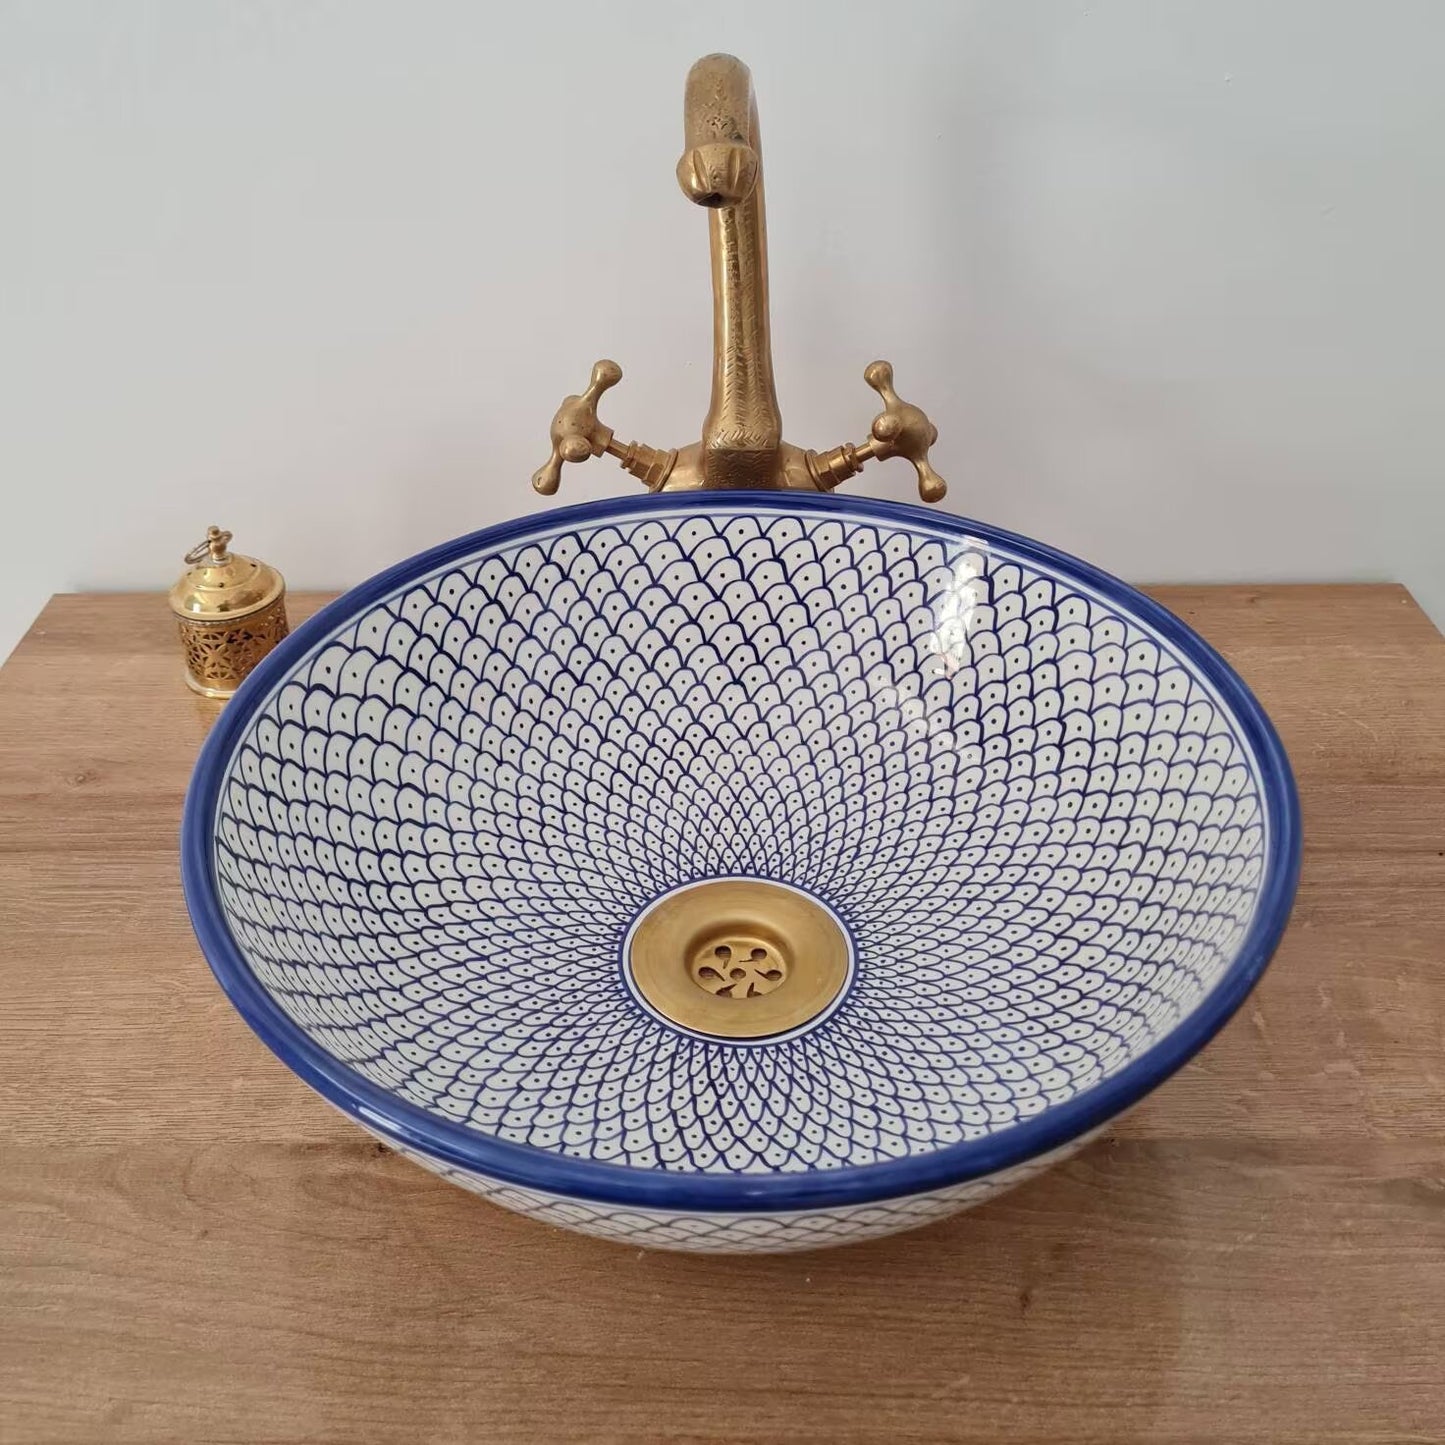 Moroccan sink | moroccan ceramic sink | bathroom sink | moroccan bathroom basin | moroccan sink bowl | Blue sink bowl #26